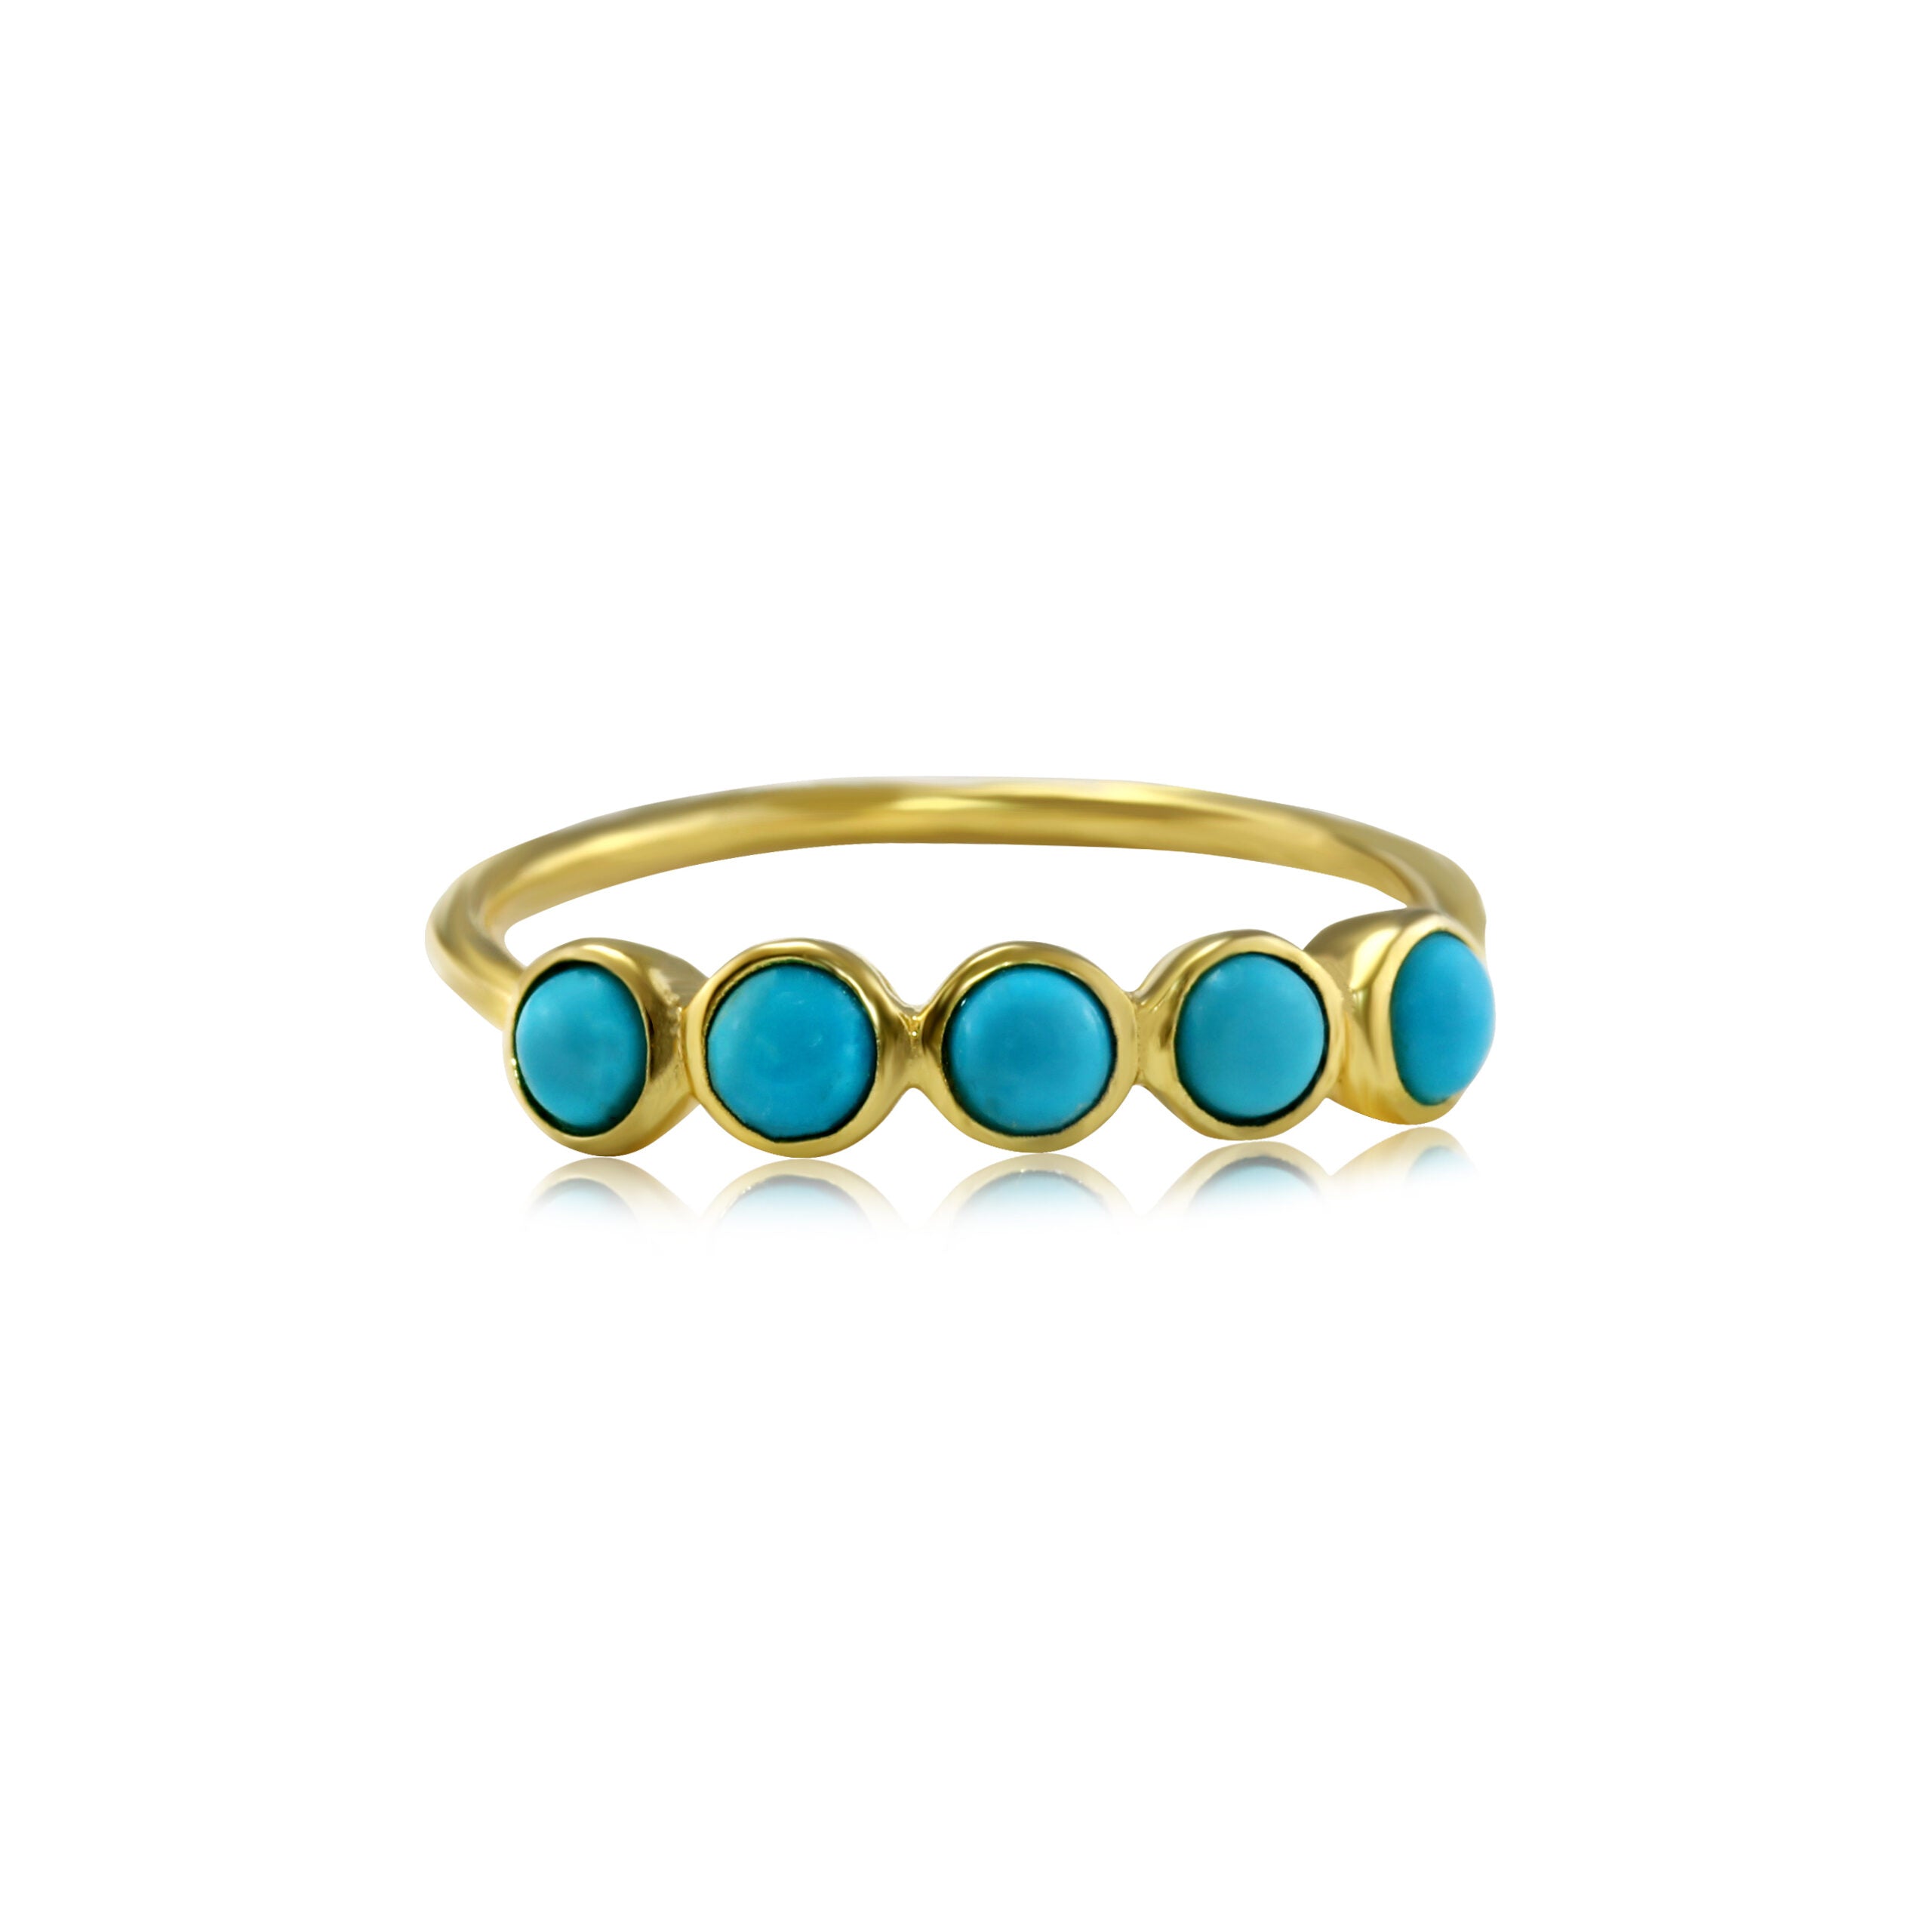 Harmonic Turquoise Ring - The Nancy Smillie Shop - Art, Jewellery & Designer Gifts Glasgow